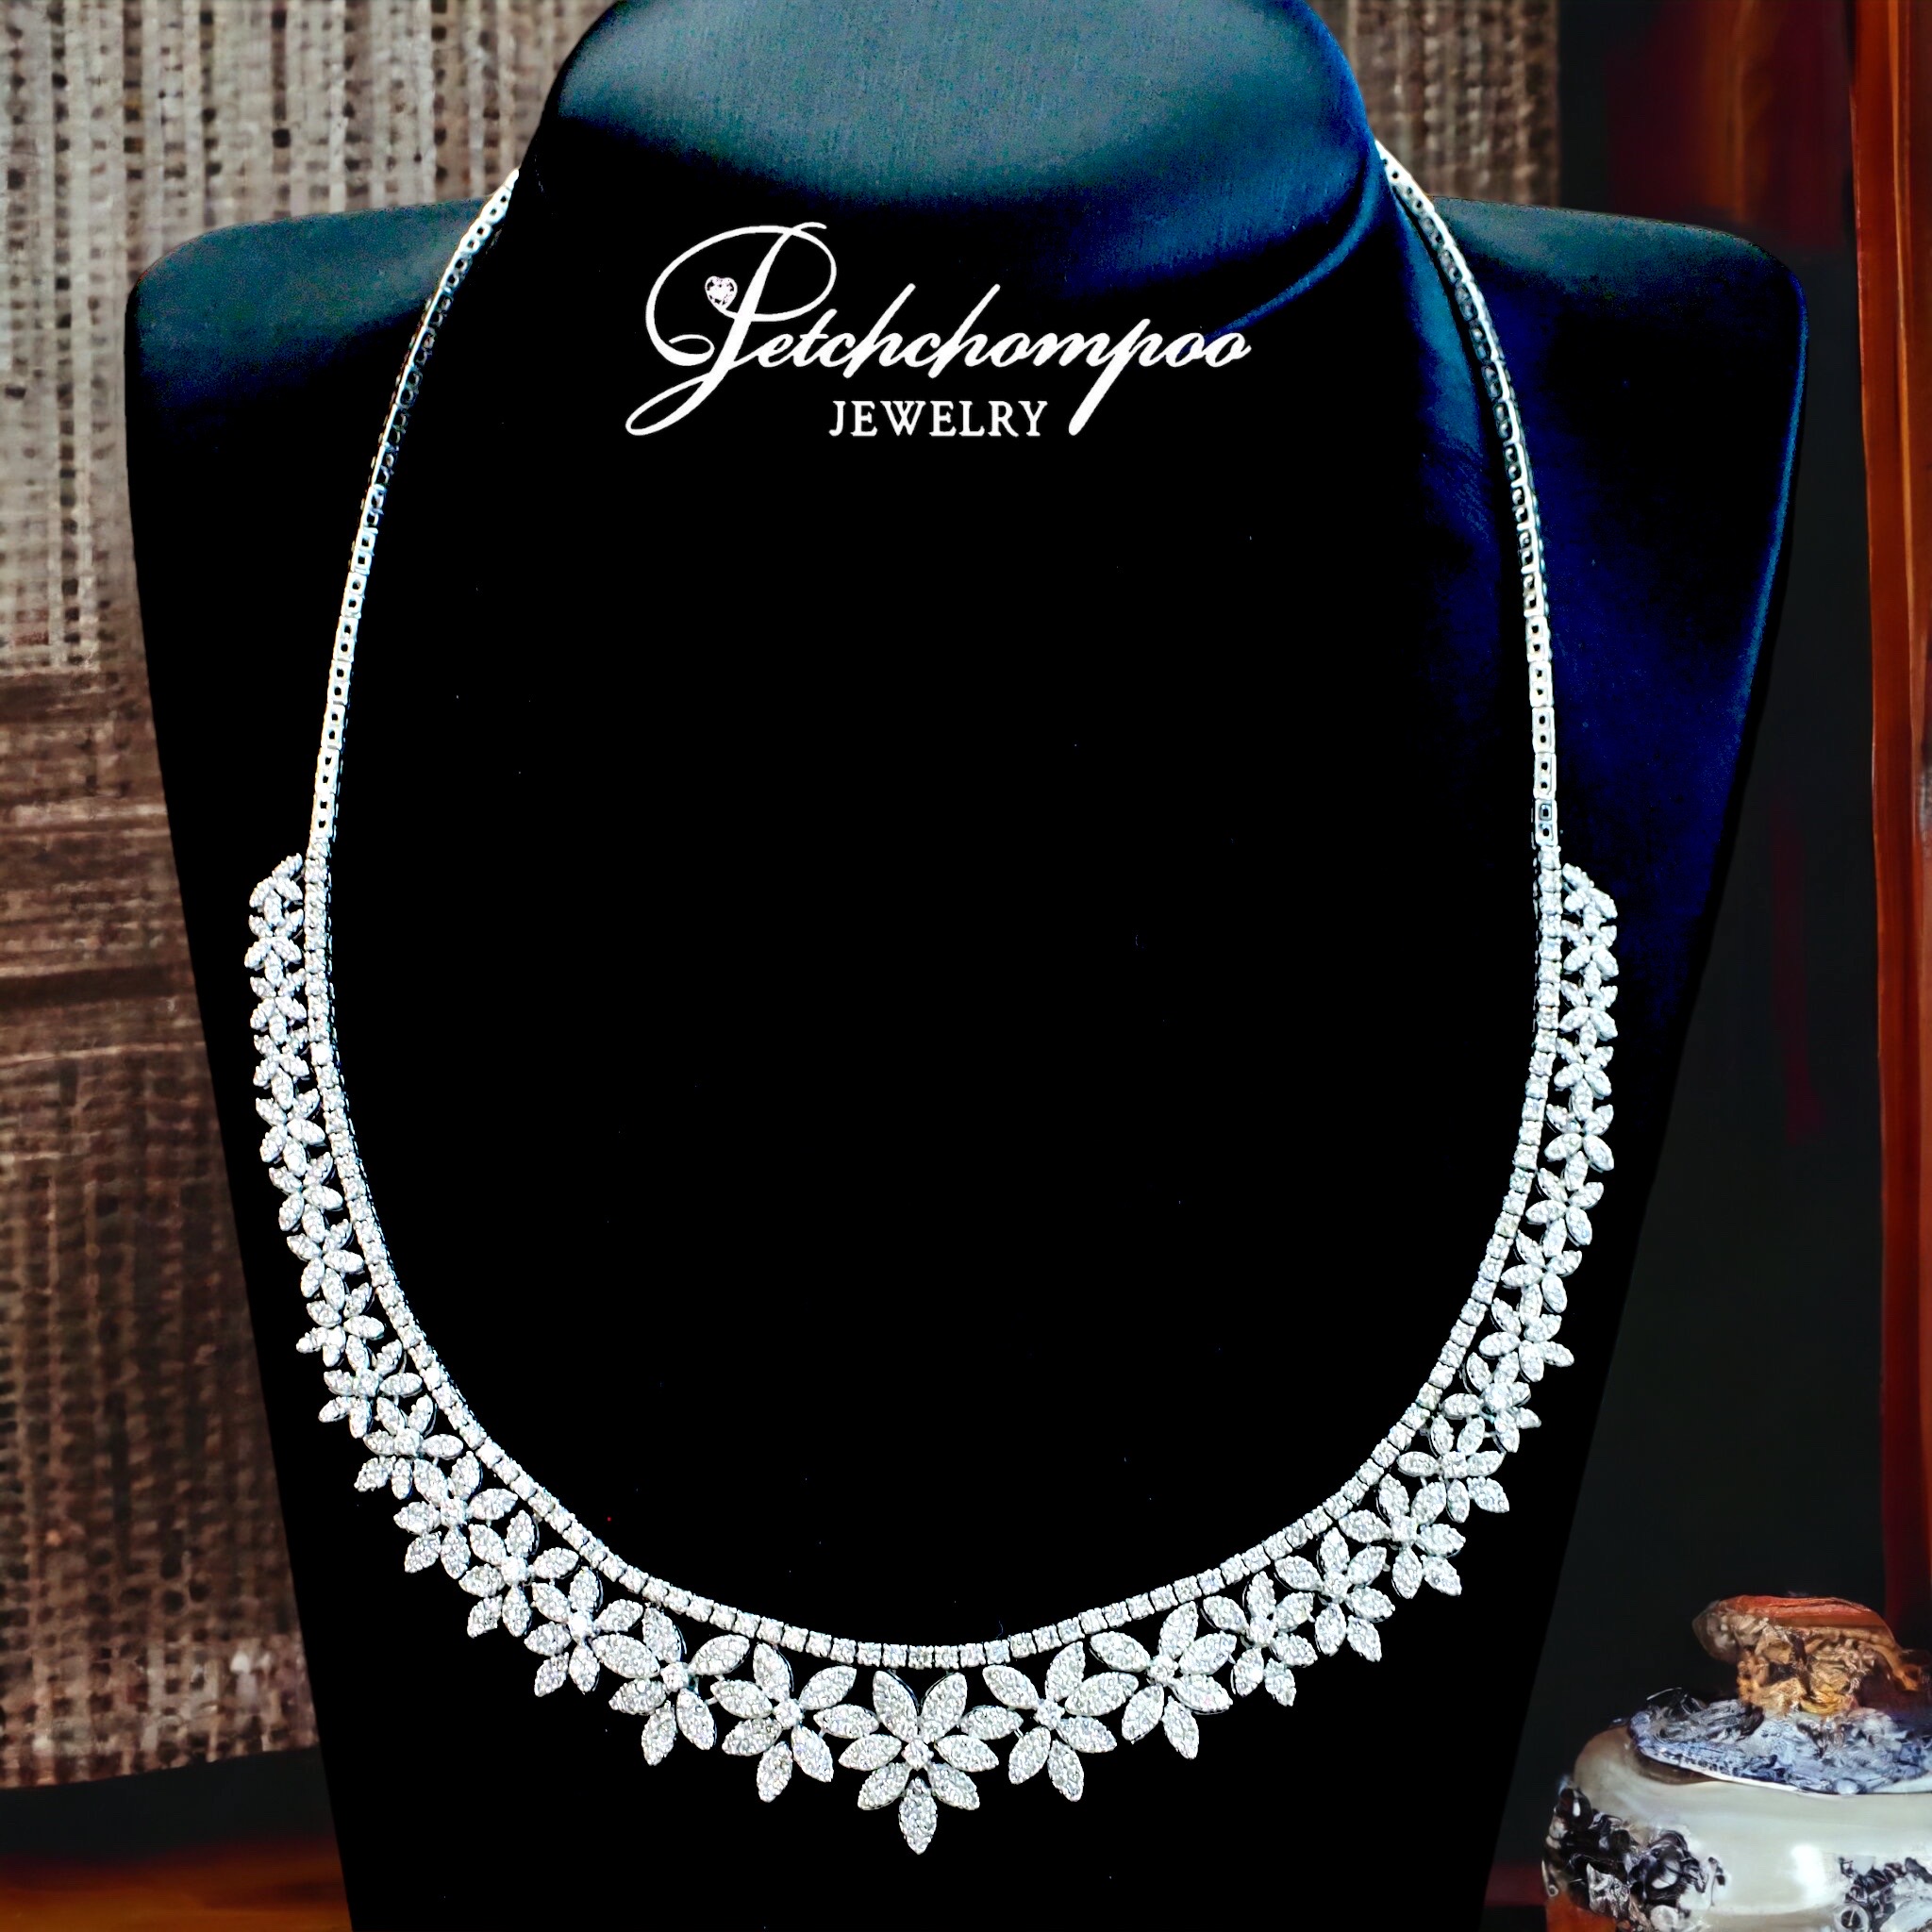 [27798] diamond necklace 7.26 carats Discount 299,000